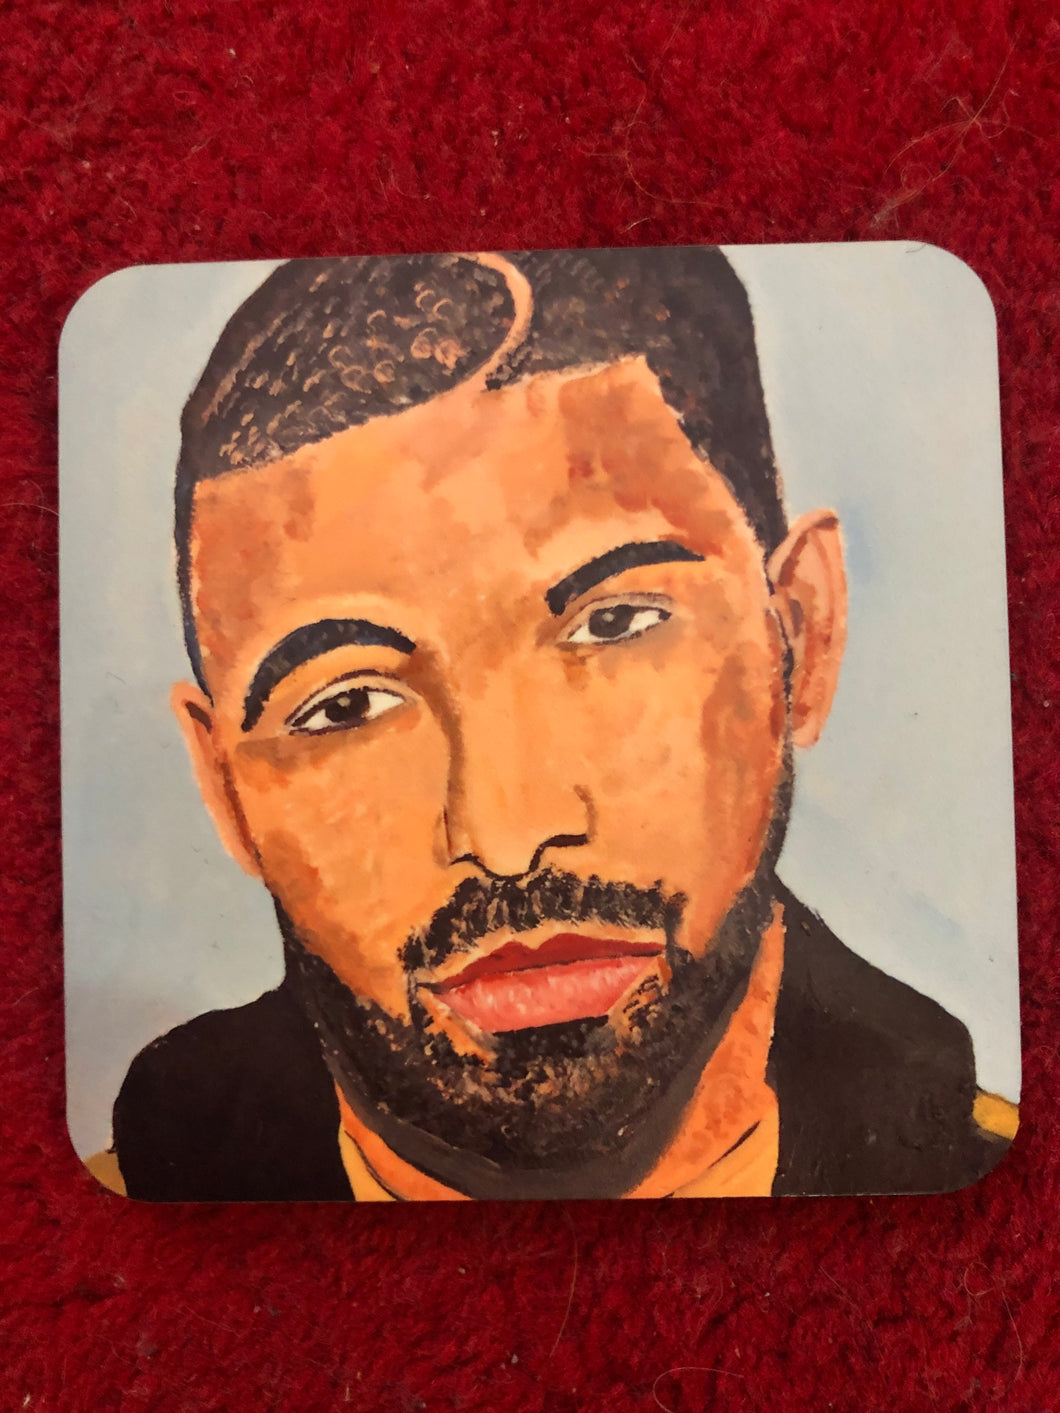 Coaster of Aubrey Drake